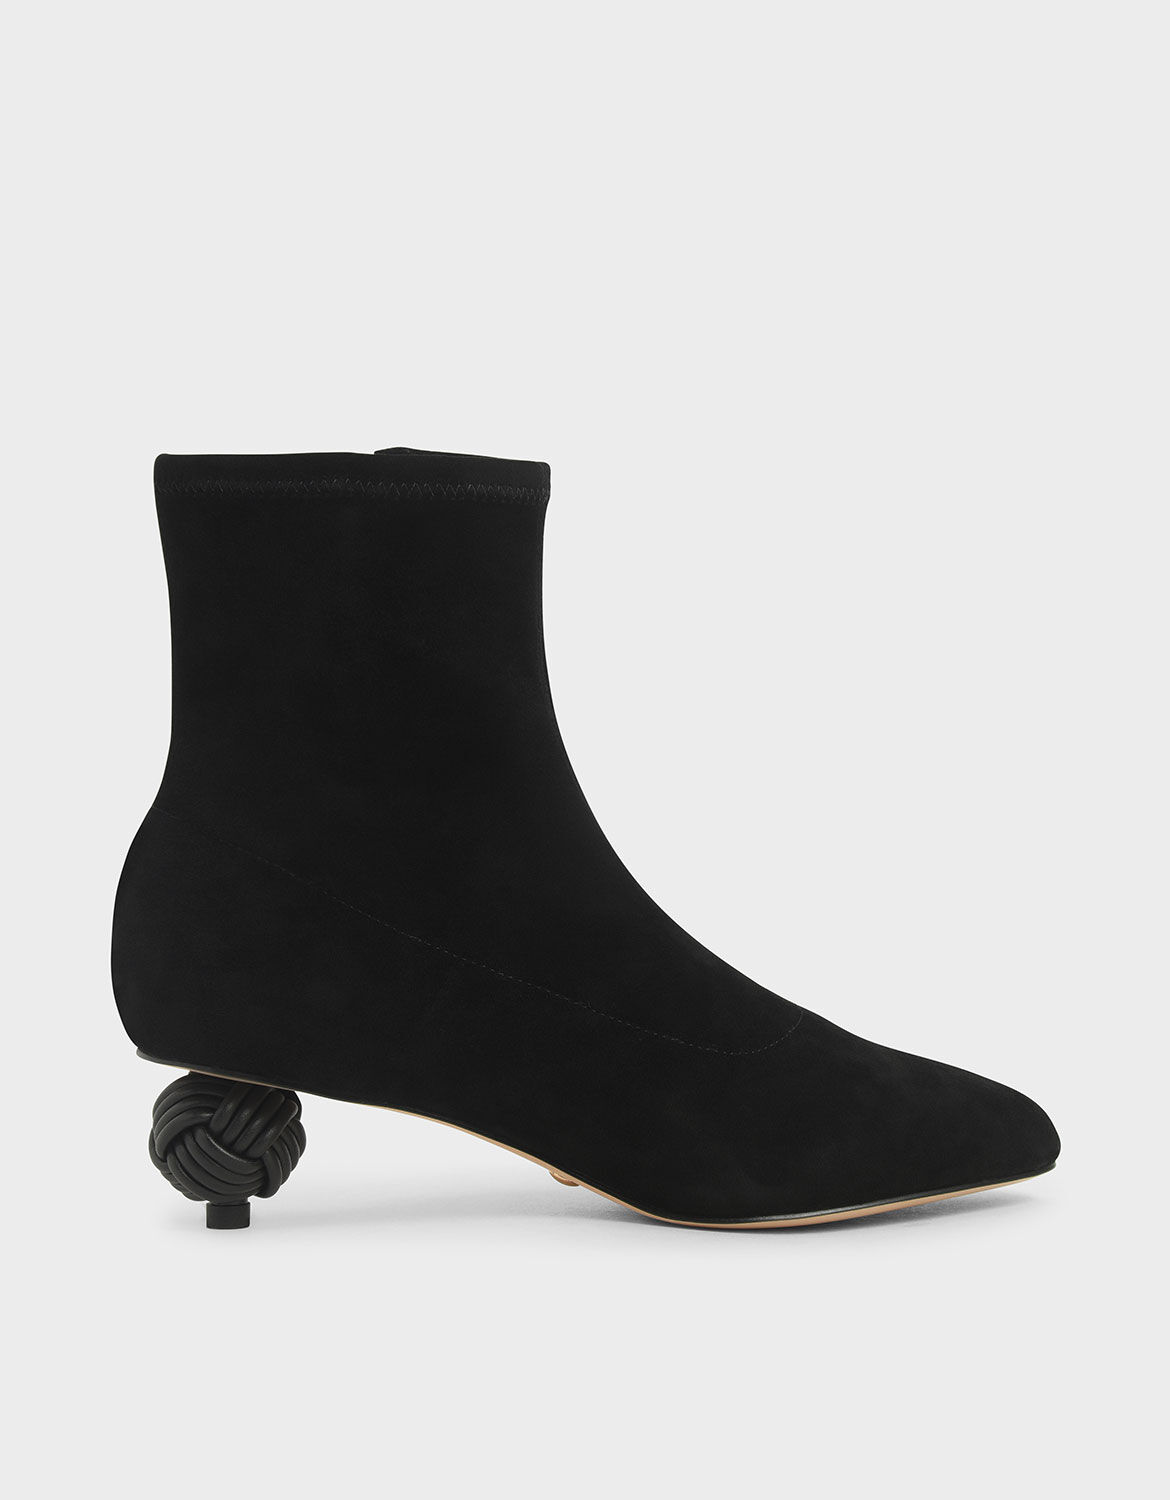 black heel boots for kids